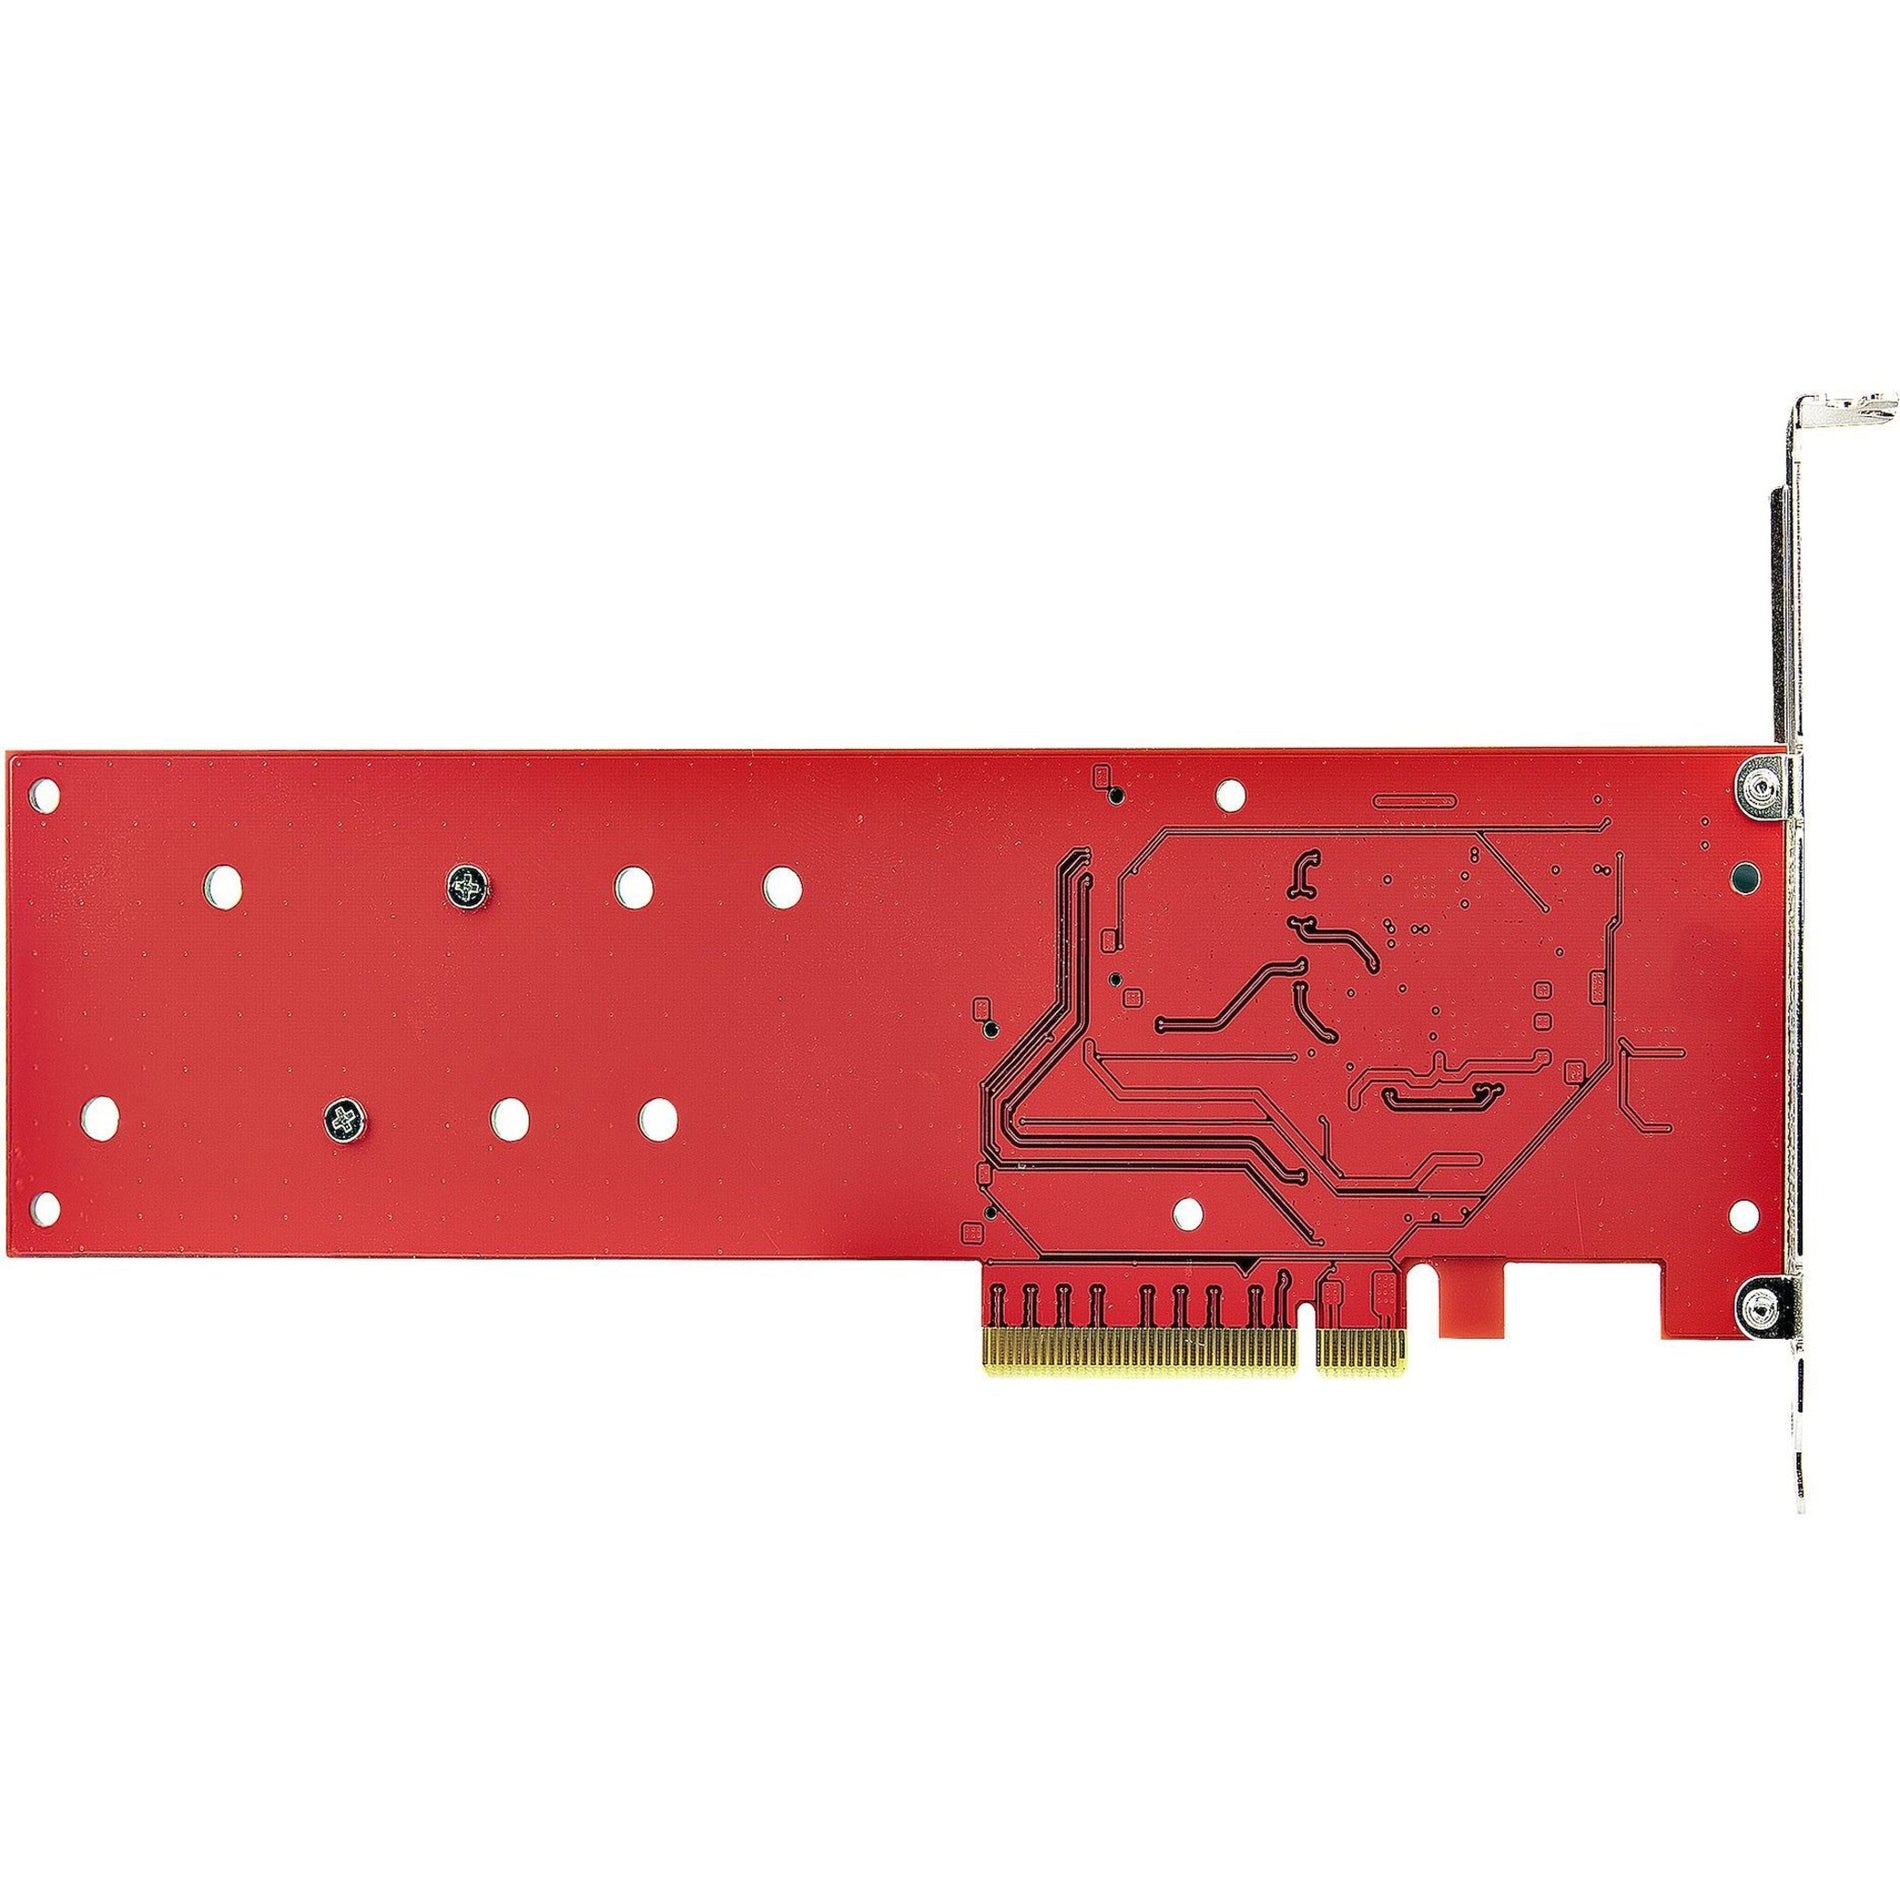 StarTech.com TARJETA DE ADAPTADOR PCIe A M.2 DUAL-M2-PCIE-CARD-B Doble SSD M.2 NVMe o AHCI a PCI Express 4.0 Hasta 7.8GBps/Unidad Se Requiere Bifurcación